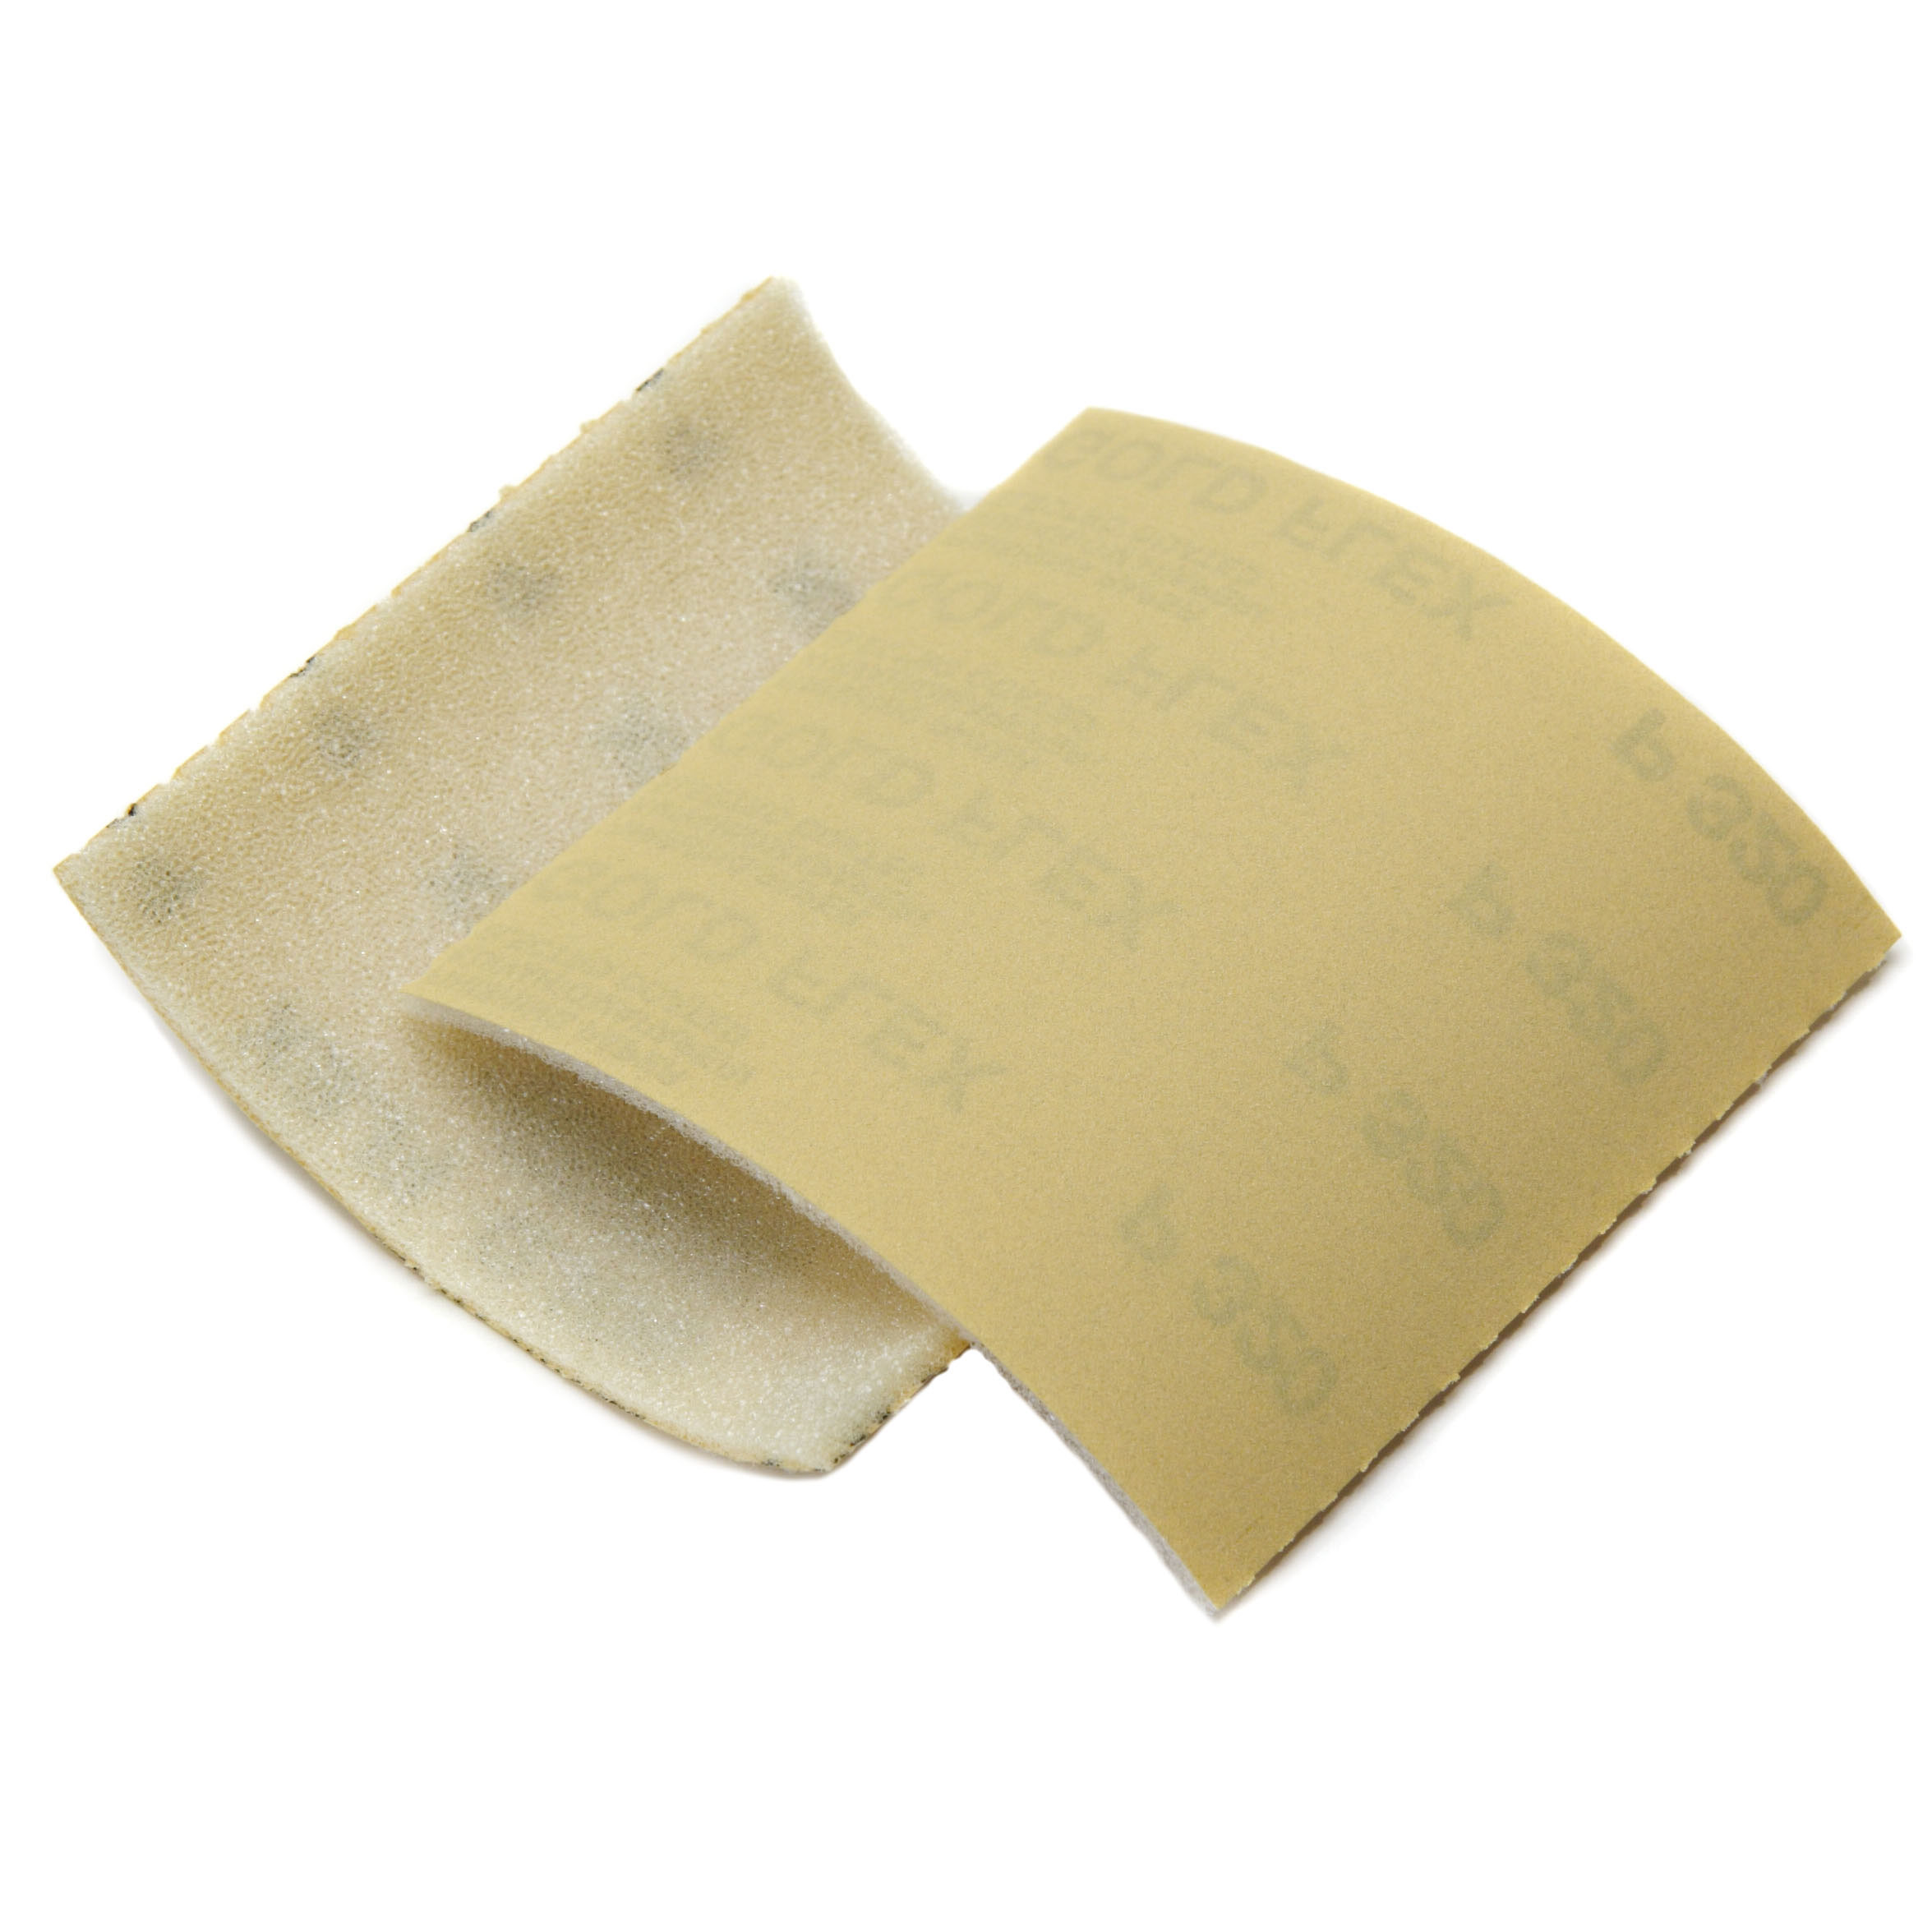 Goldflex Soft 4 1/2" X 5" Foam-backed Abrasive Pad, 500 Grit, 200/pack